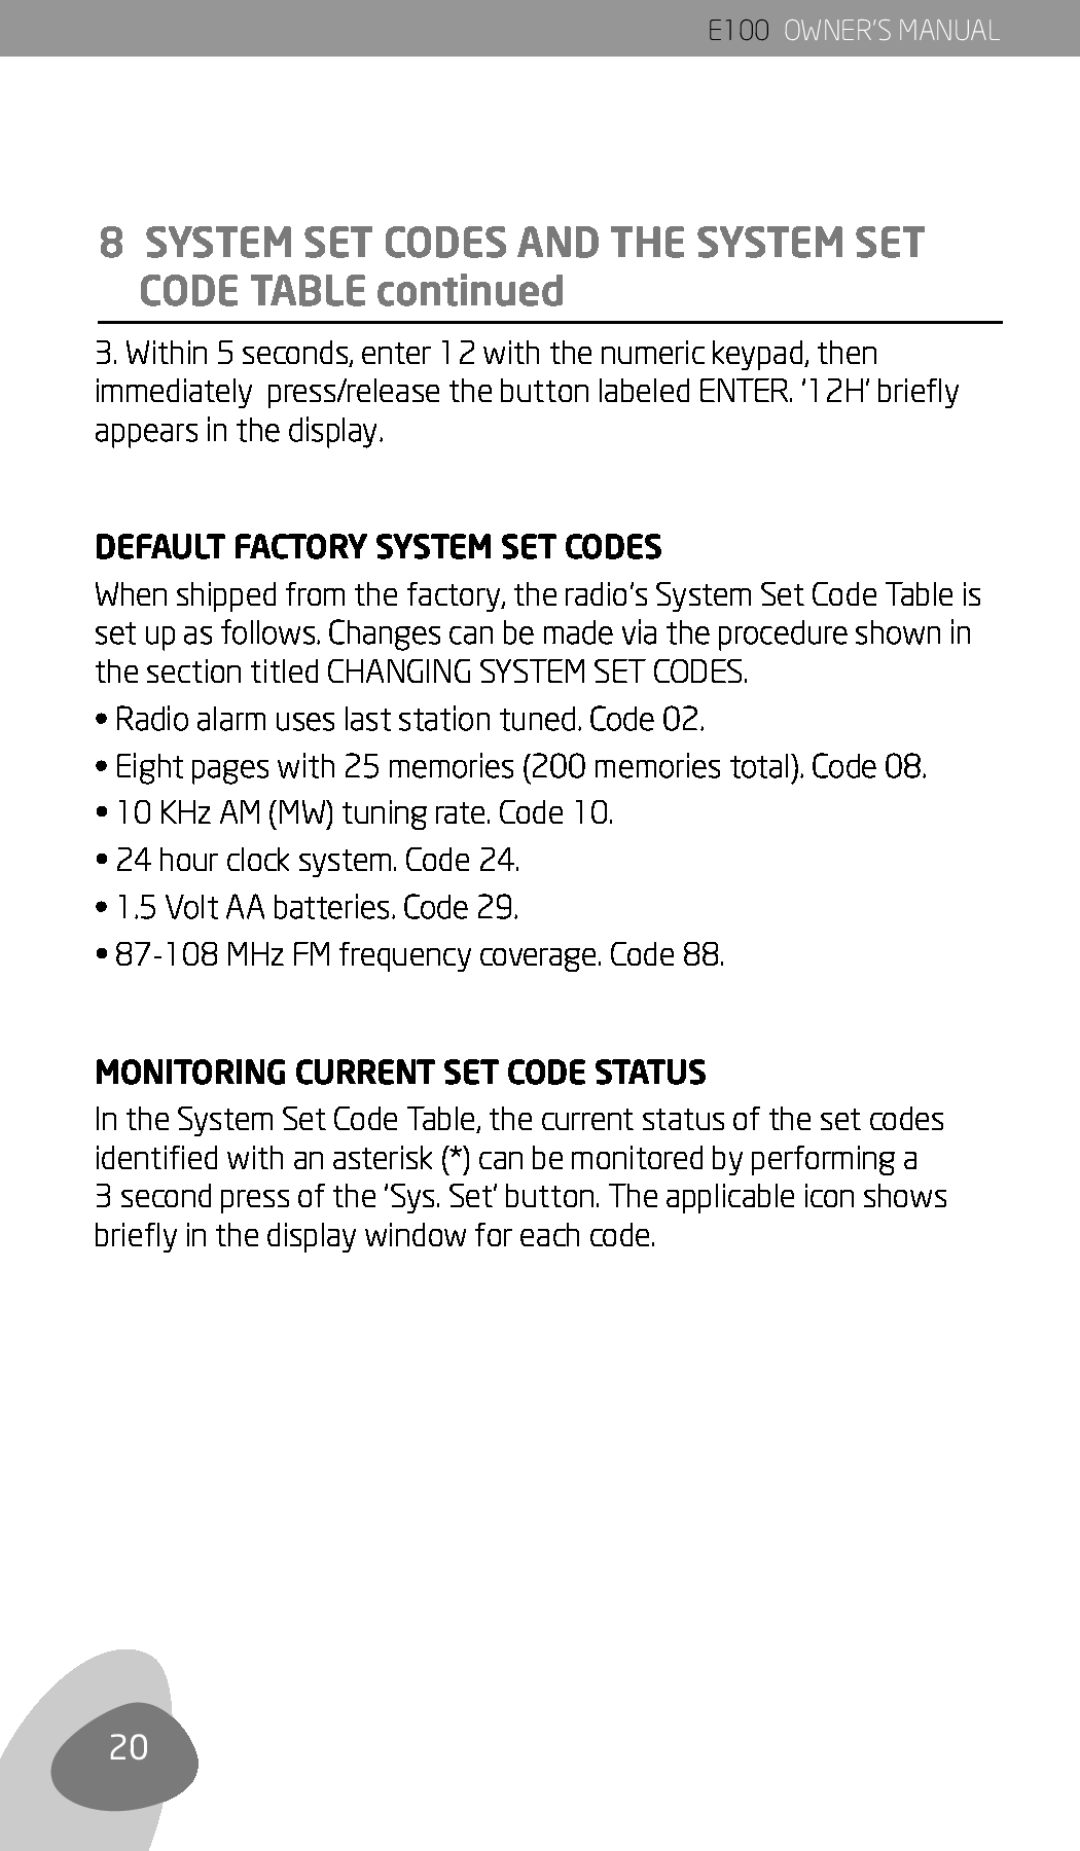 Eton E100 owner manual Default Factory System Set Codes 